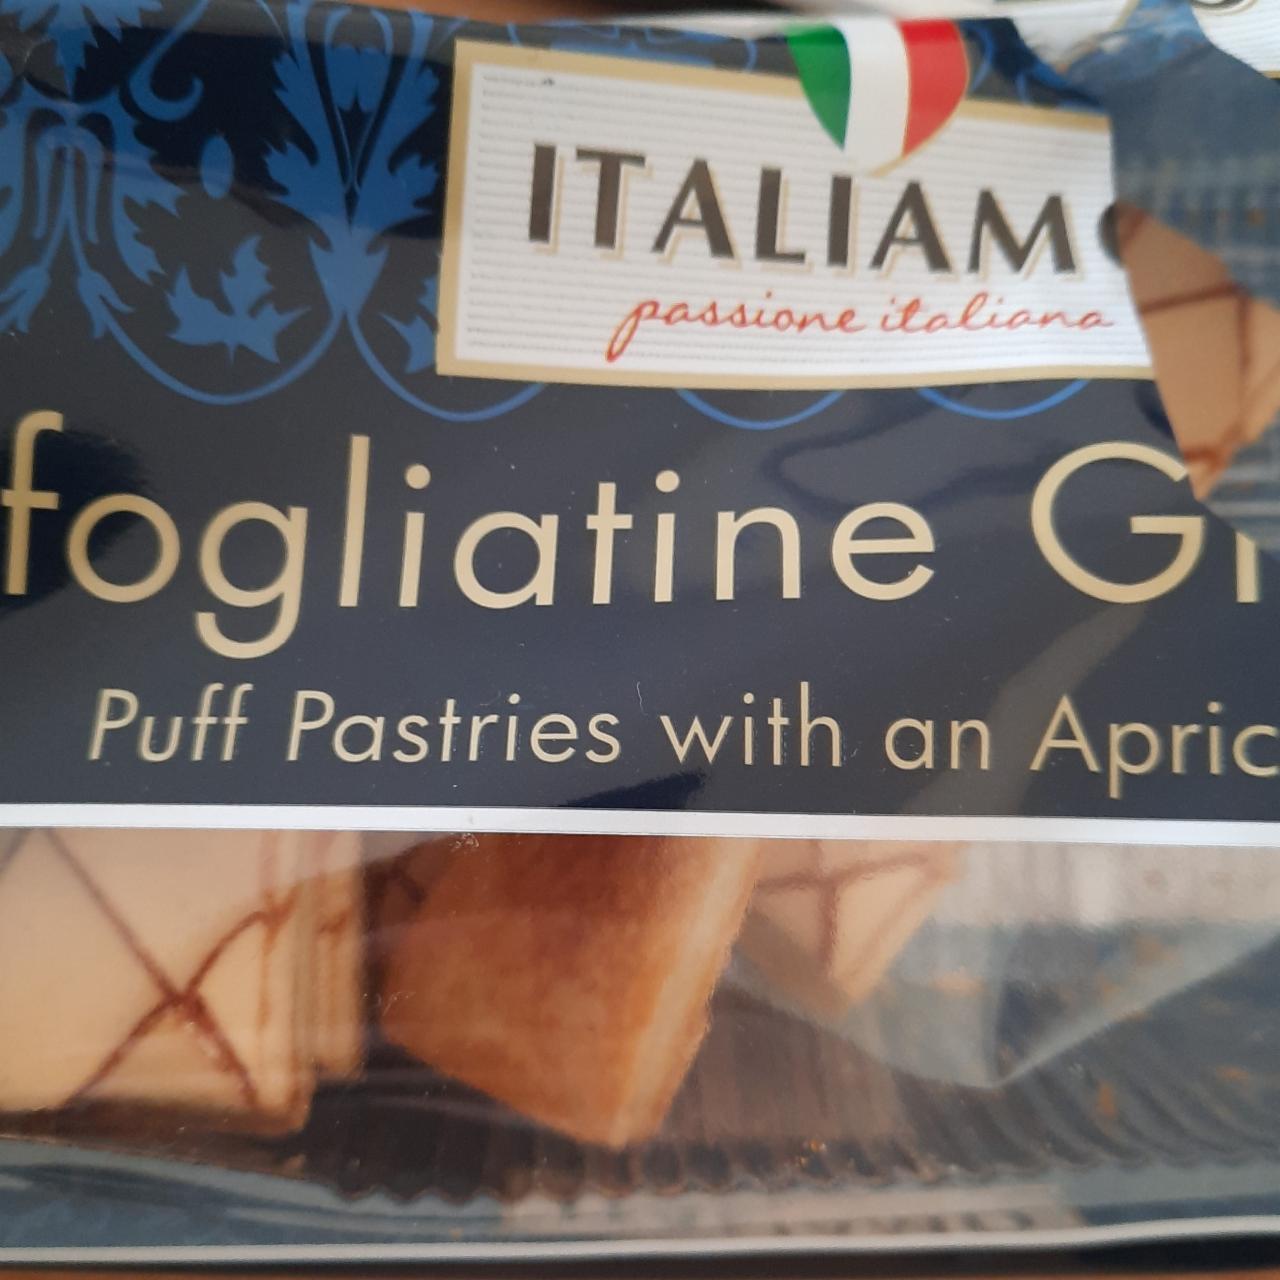 Фото - итальянское печенье Sfogliatine glasatte Italiamo